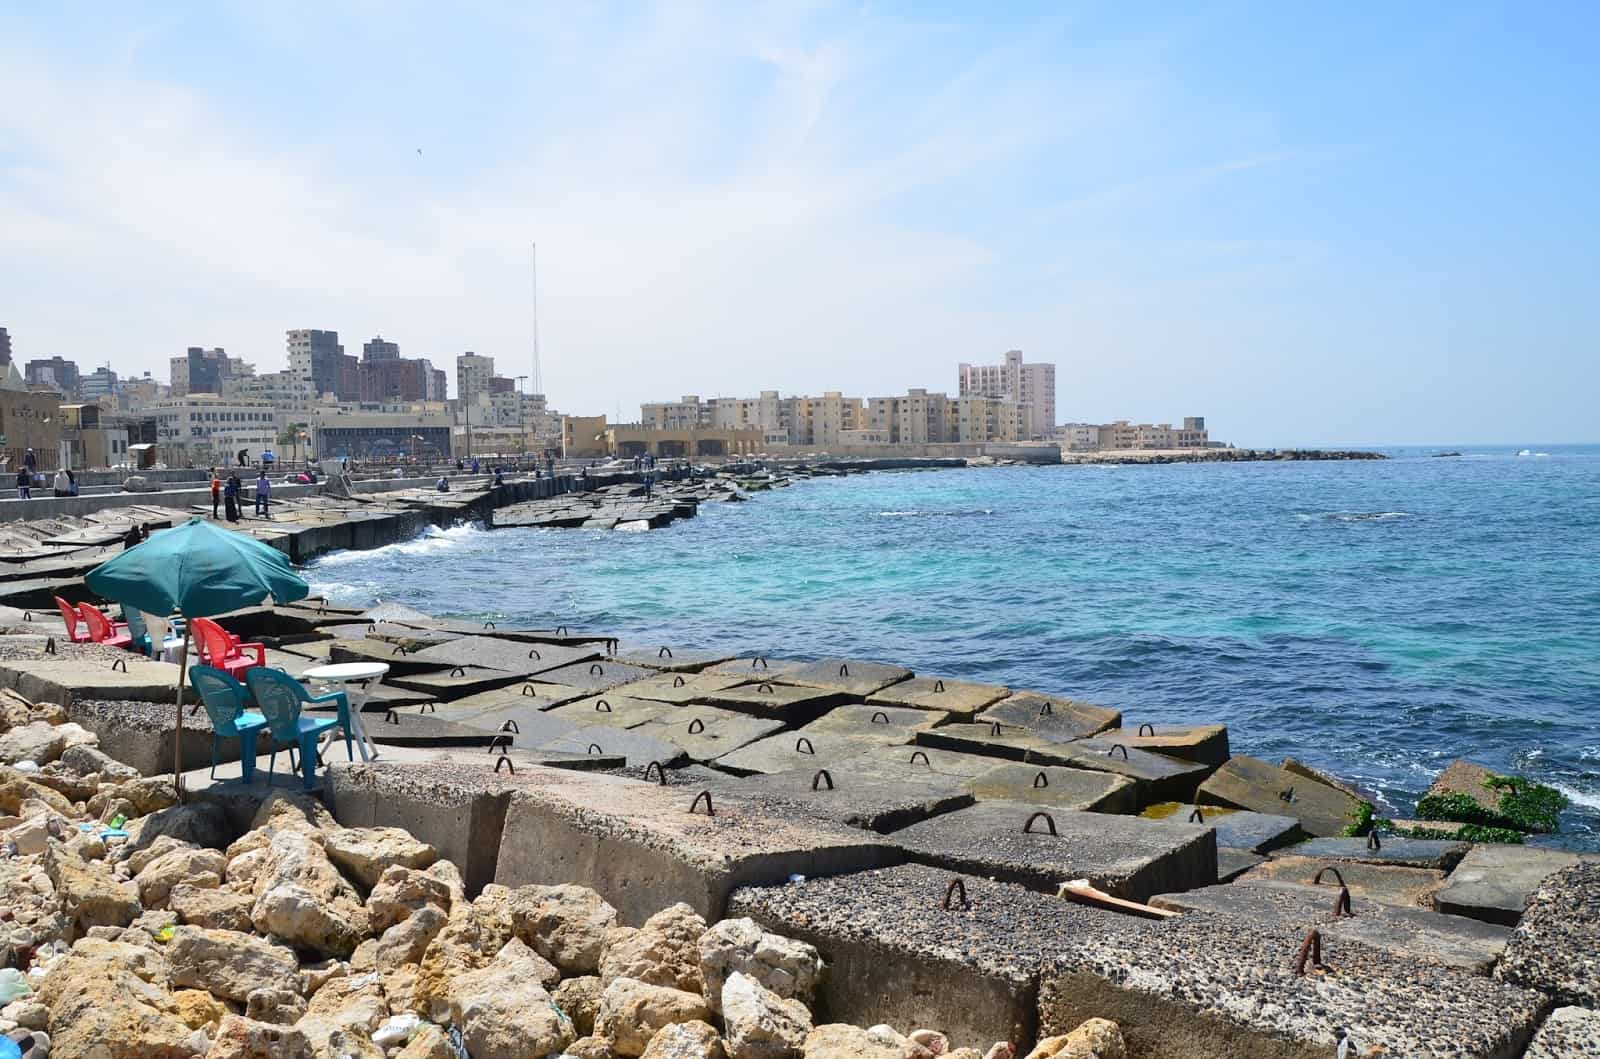 Alexandria meets the Mediterranean Sea in Alexandria, Egypt